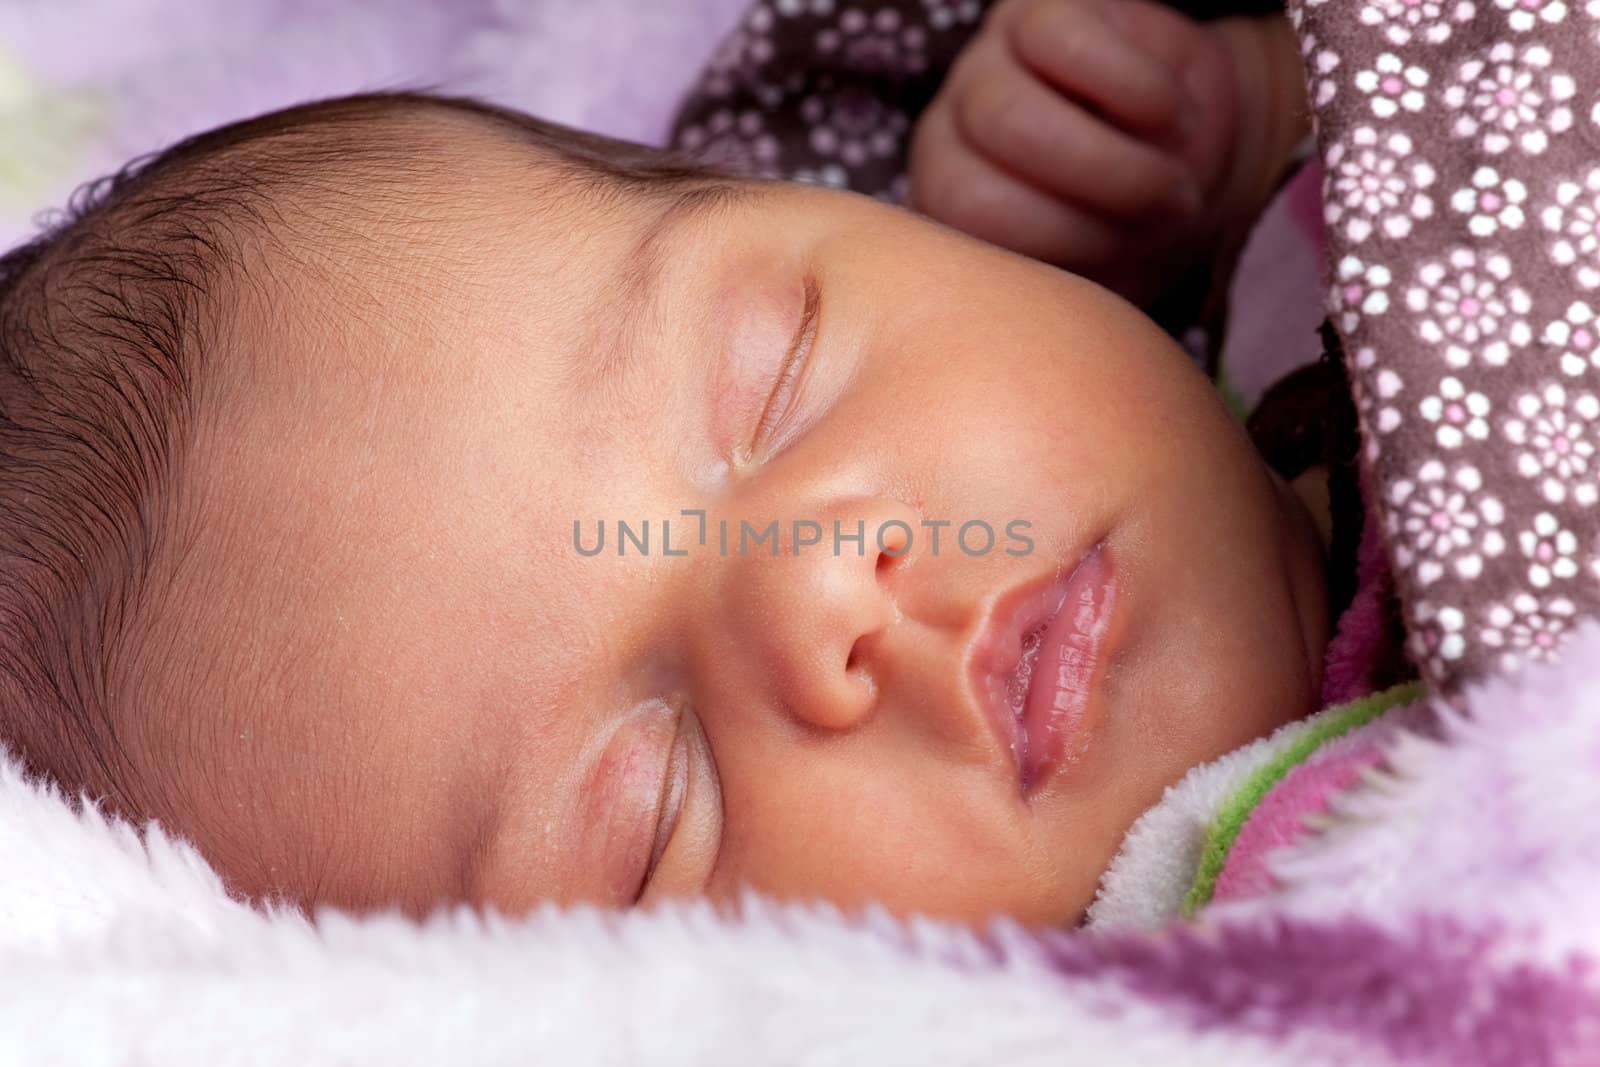 A newborn baby sleeping peacefully under blankets.